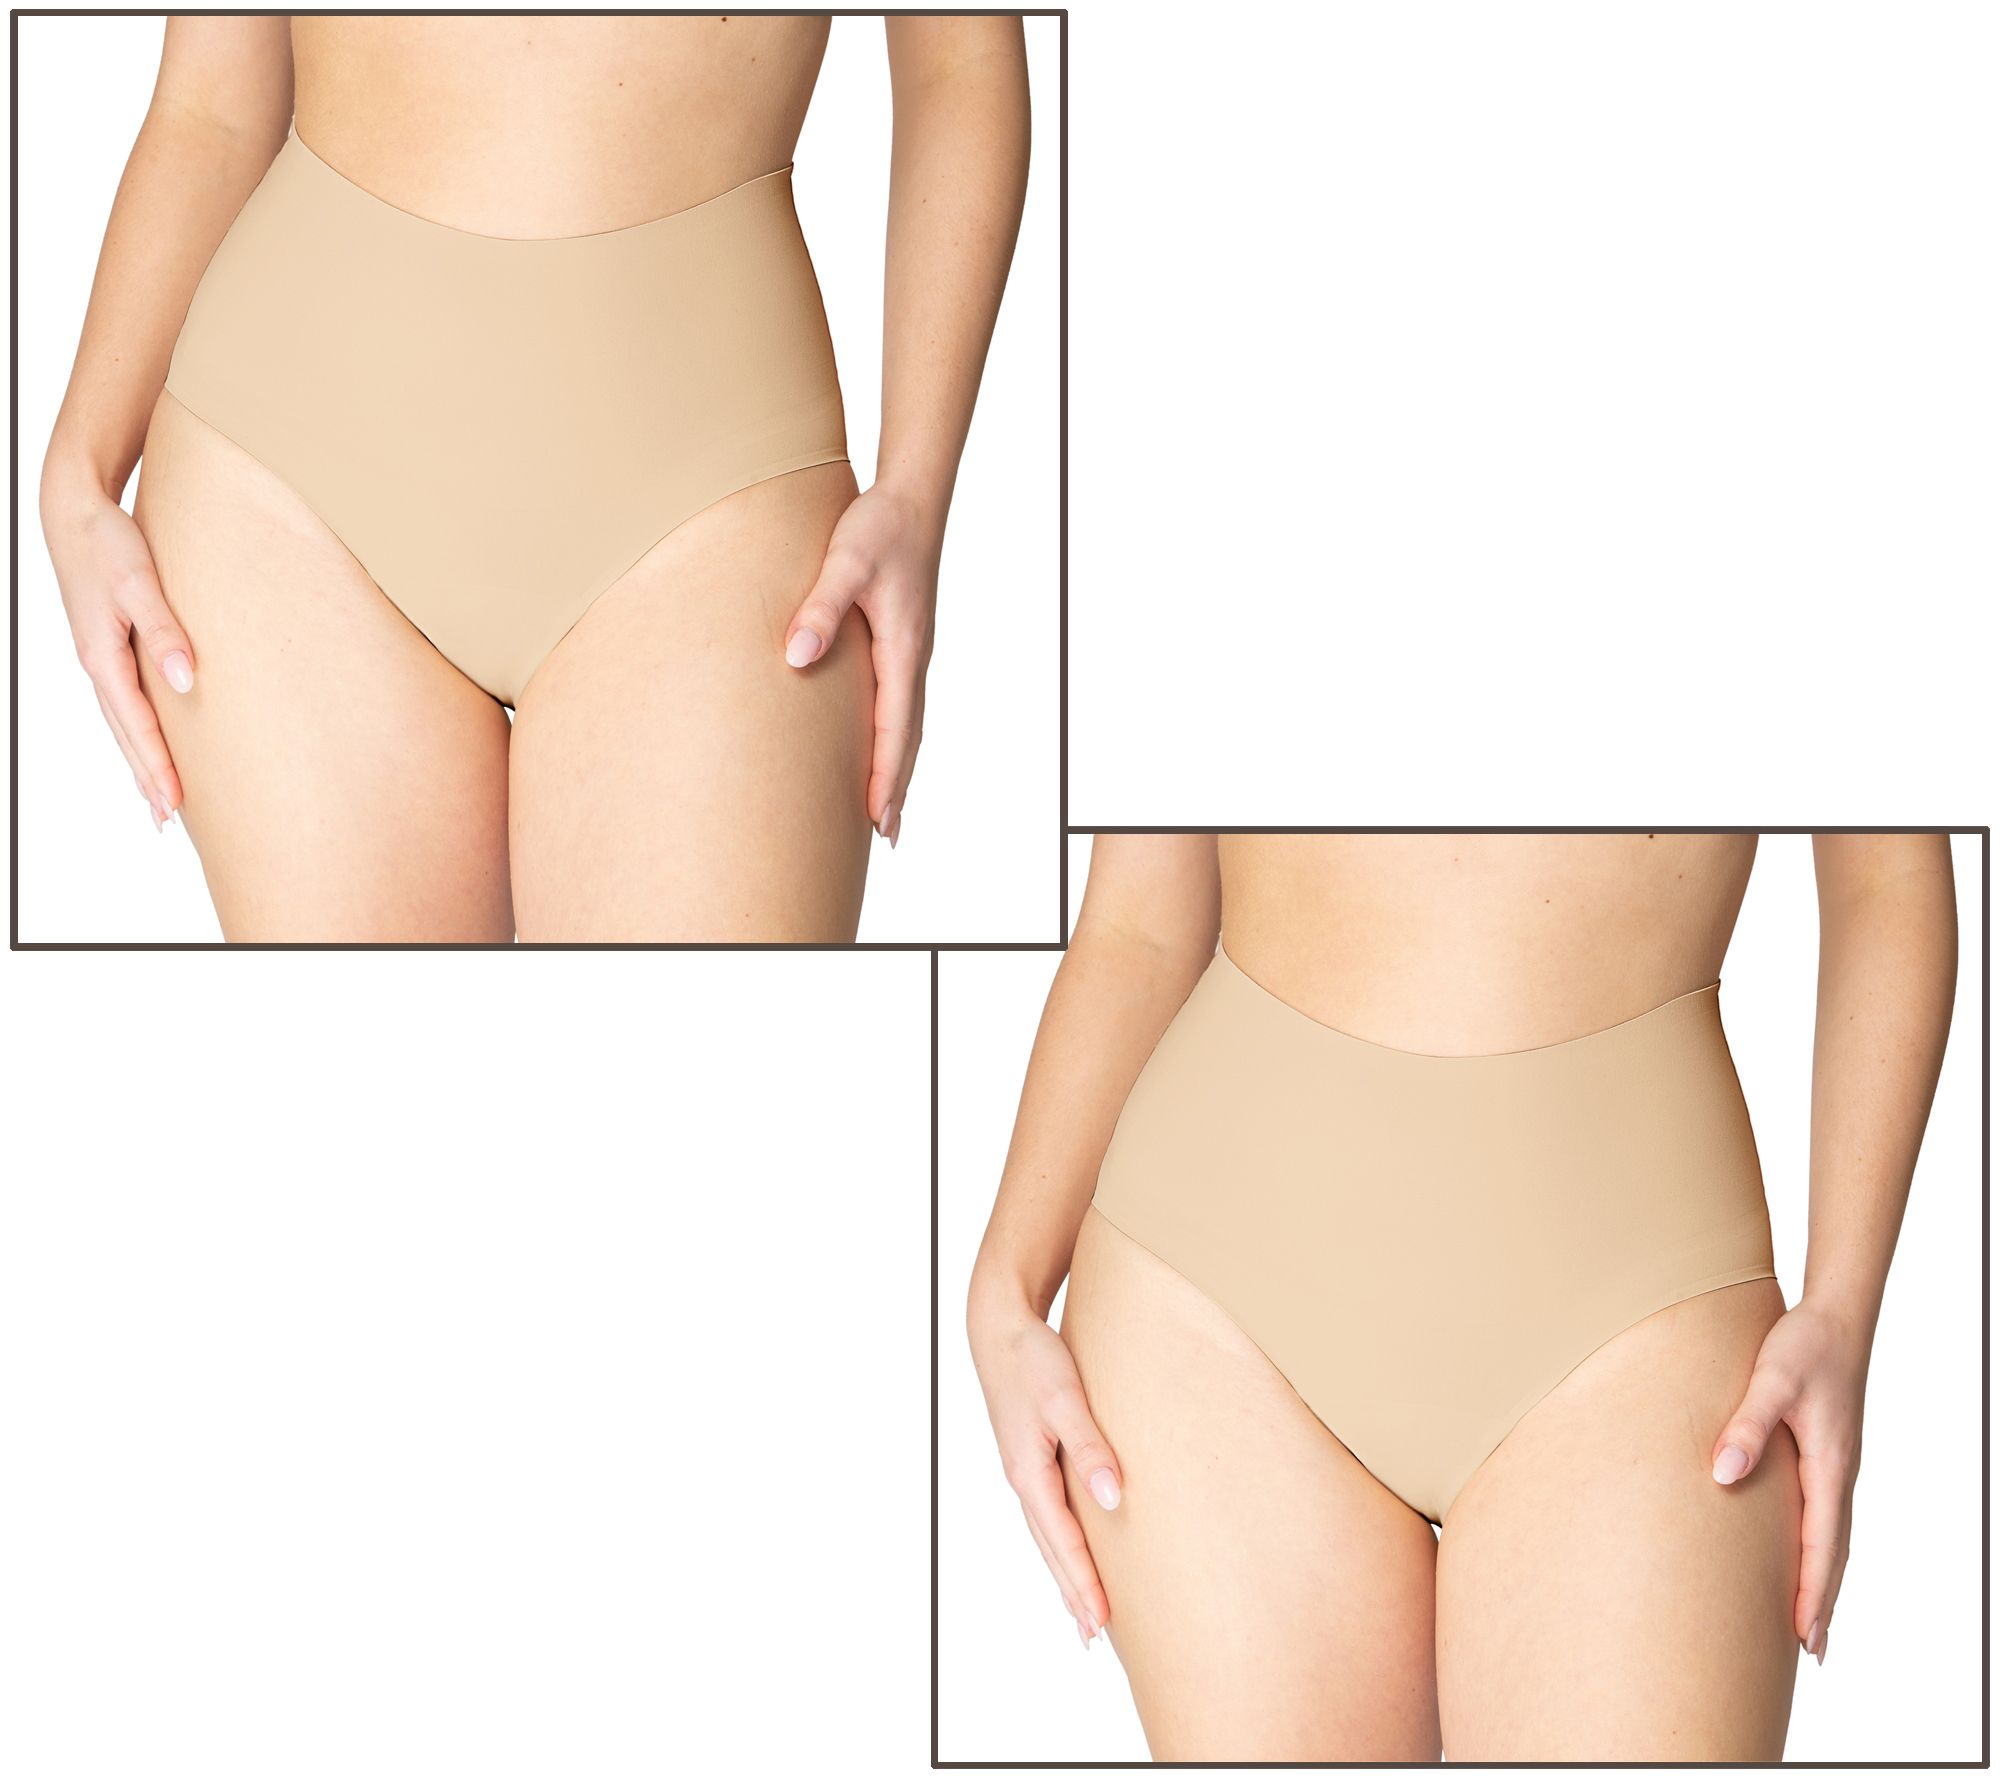 NEW Thinx Air Bikini Period Panty Size M Medium Black Moderate Absorbency -  NWT